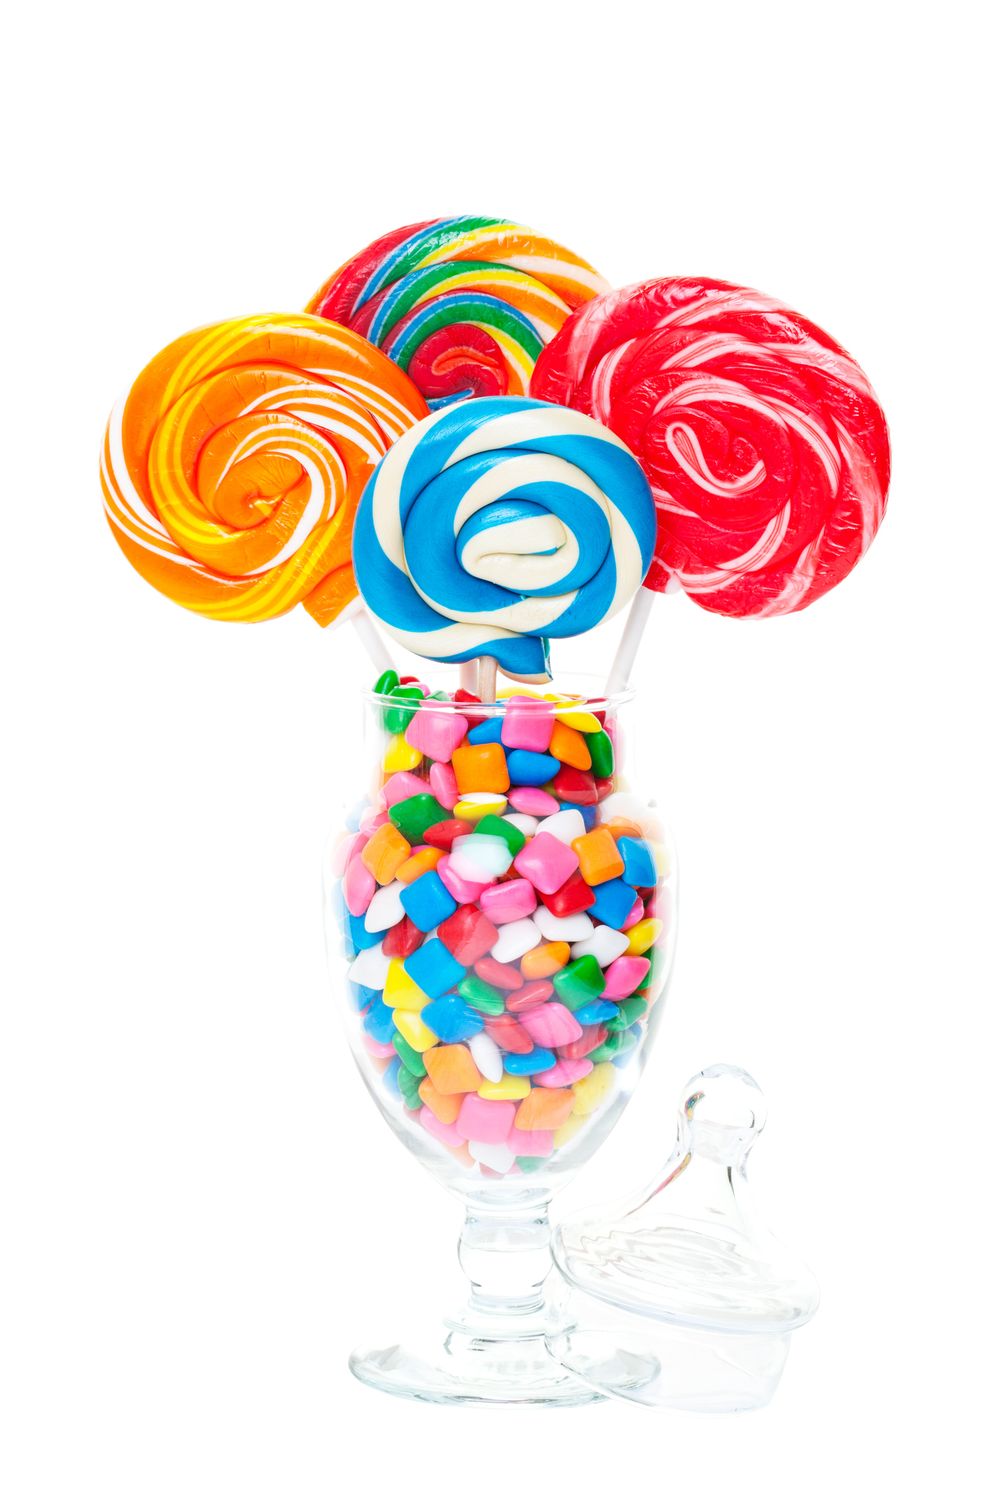 Swirled lollipops and bubble gum candy arrangements 